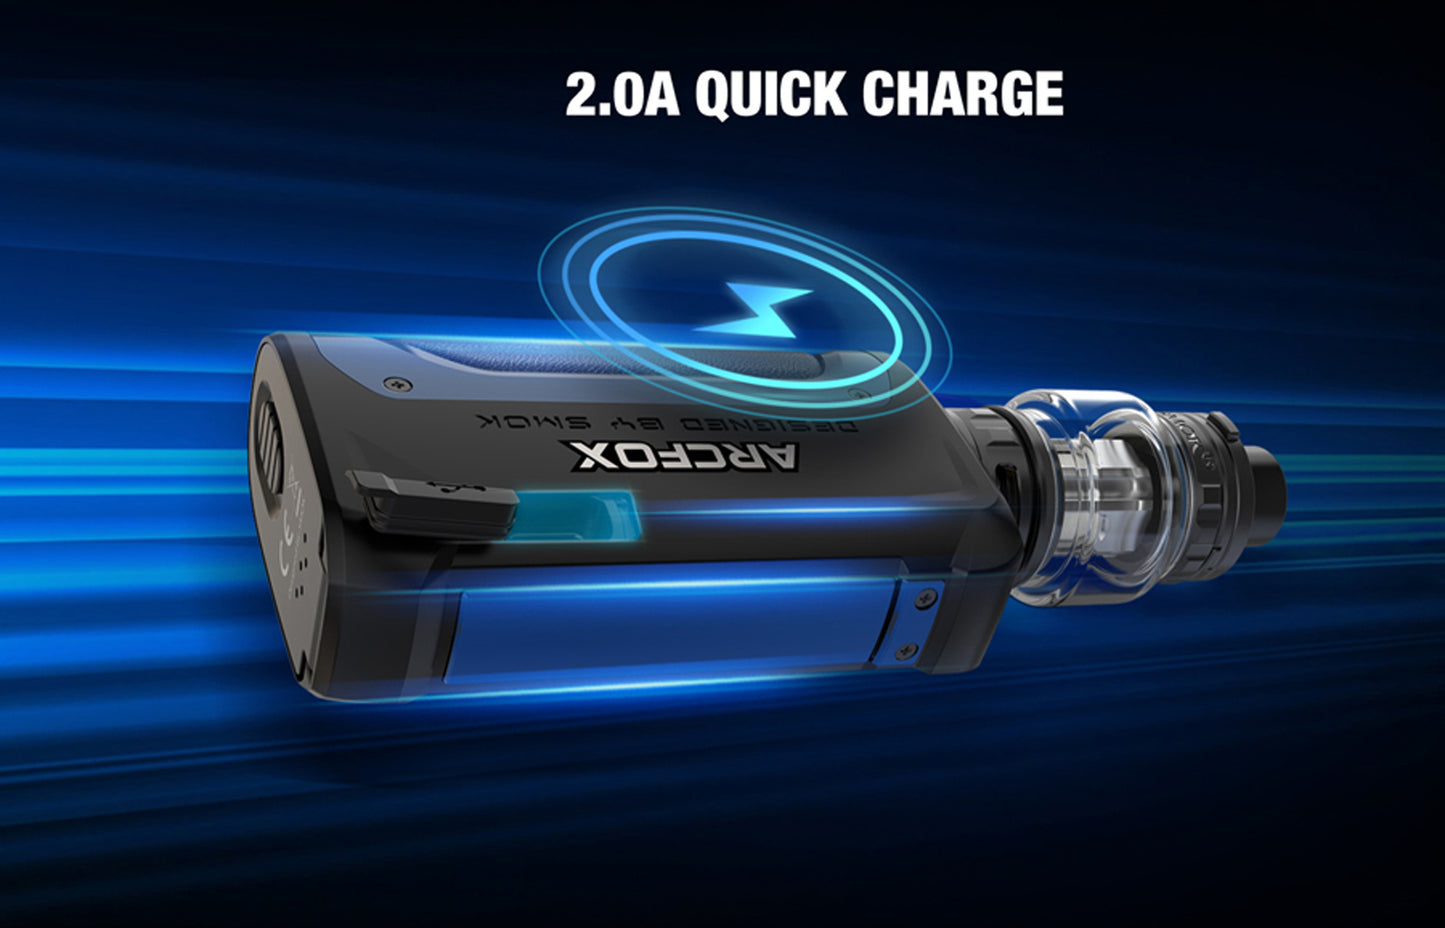 Smok Arcfox Kit - Unleash Quick-Fire Power with 230W & Dual 18650 Batteries